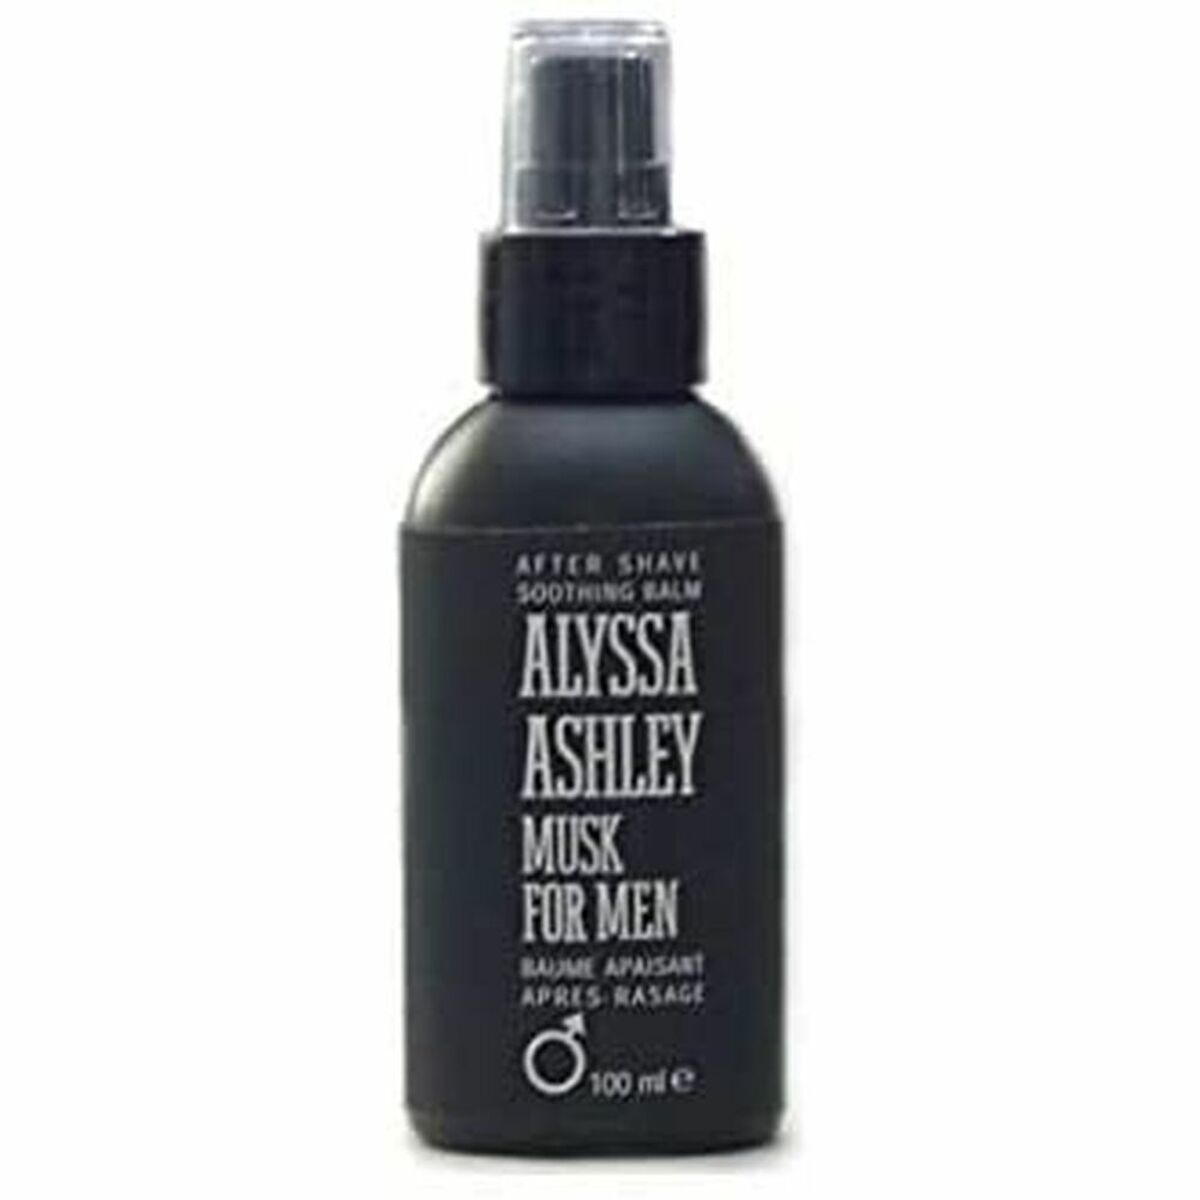 Balsam After Shave Musk for Men Alyssa Ashley (100 ml)